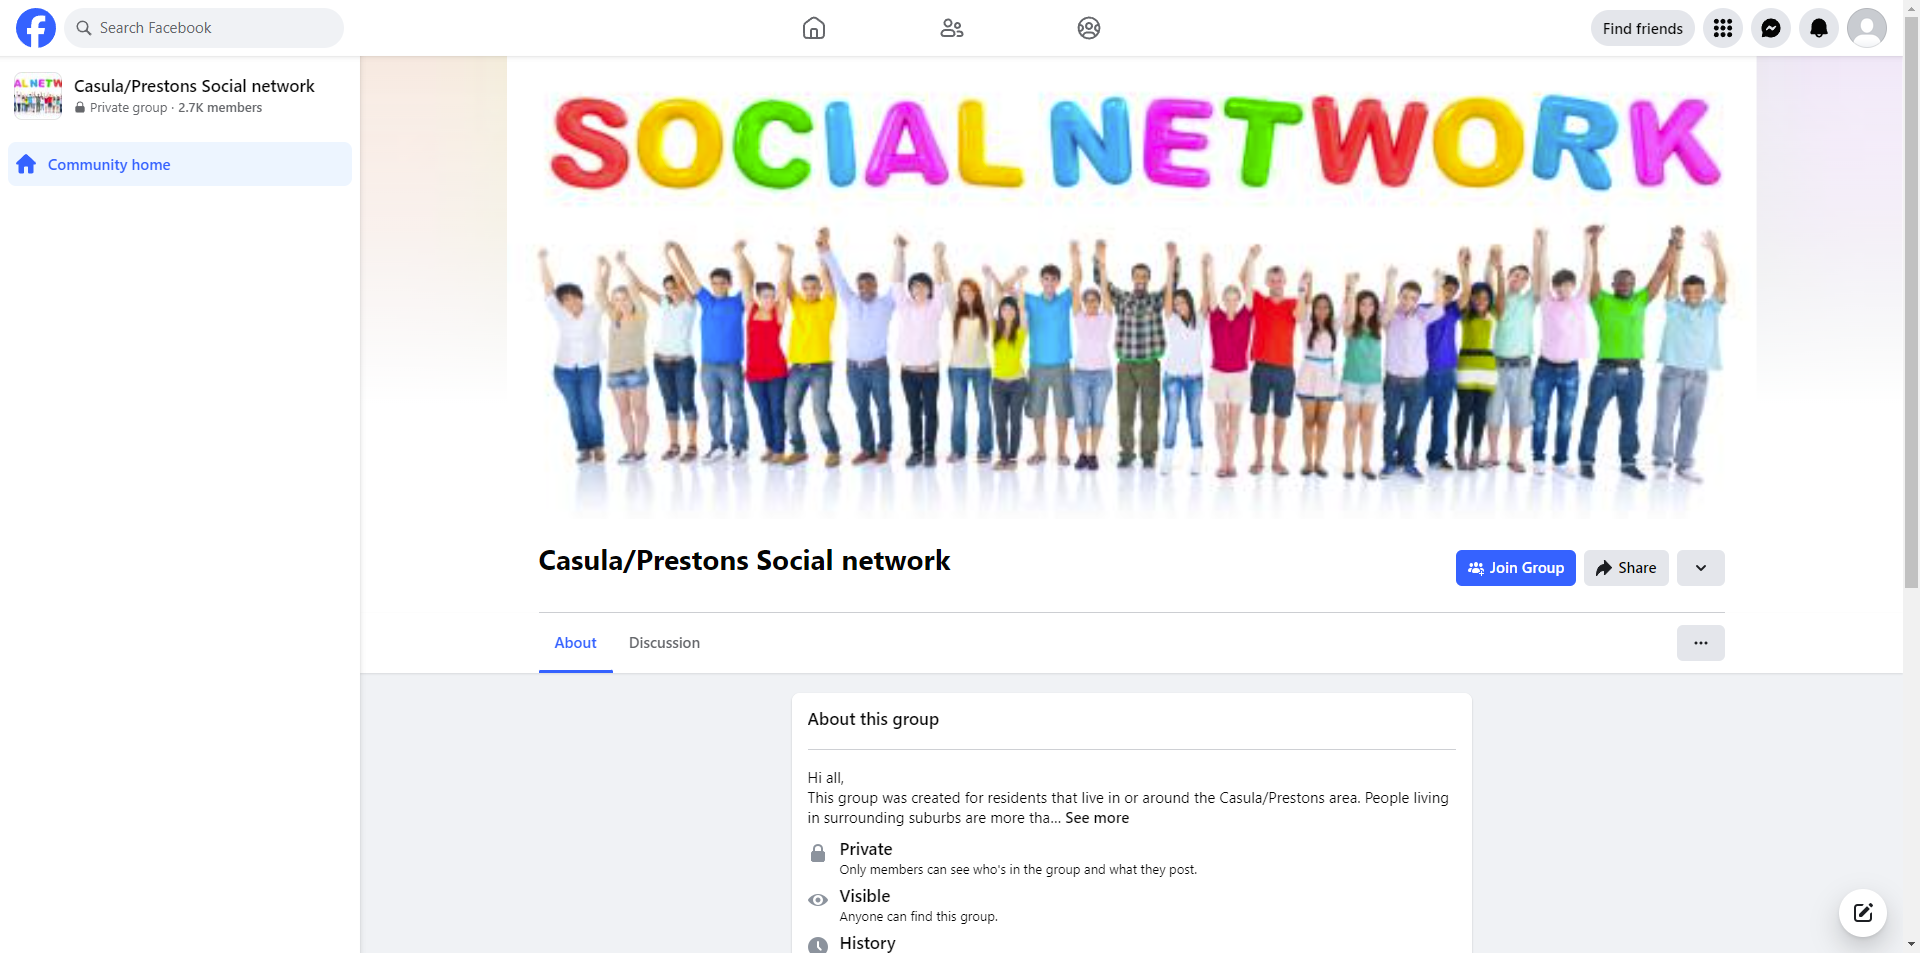 Casula/Prestons Social Network